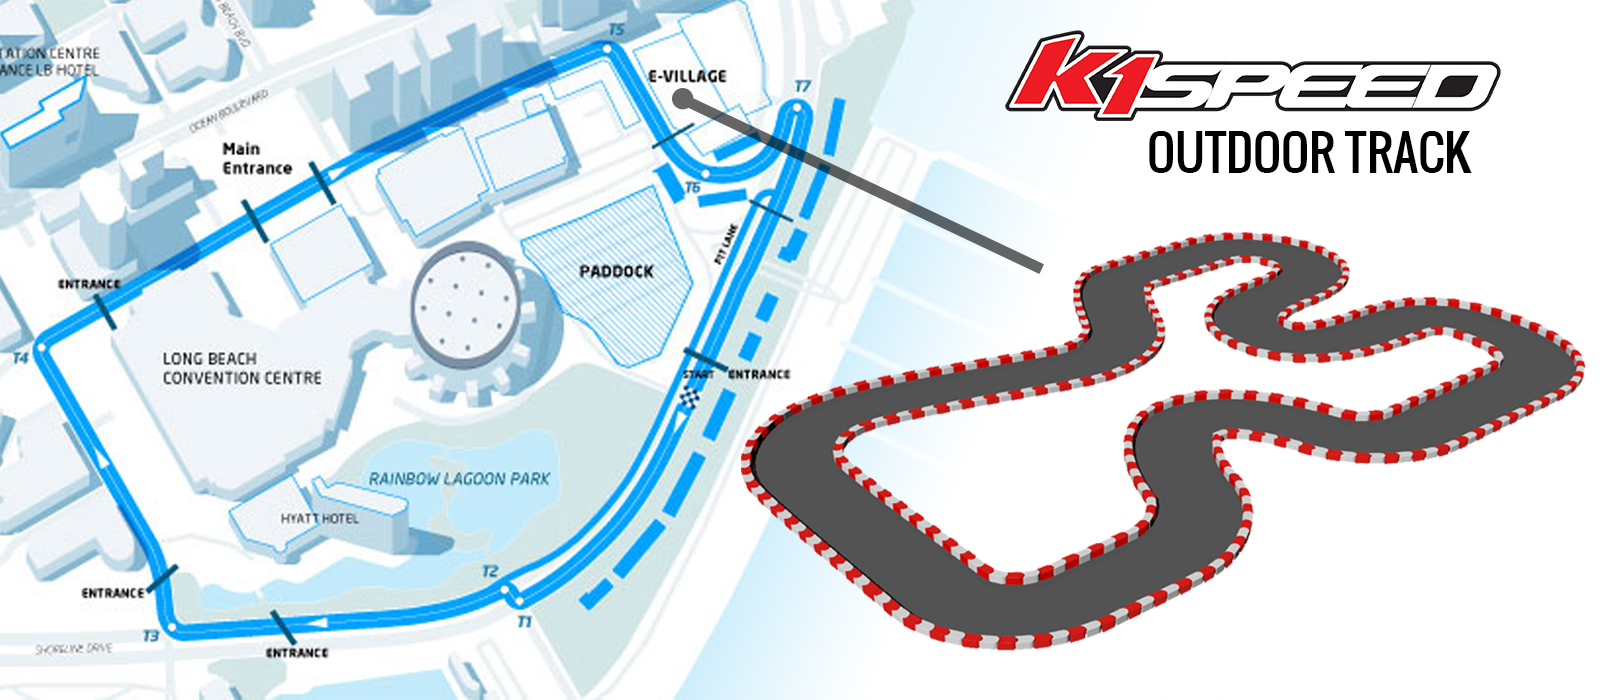 Long Beach Formula E Race The Site Of K1 Speeds First Ever Outdoor Kart Track 